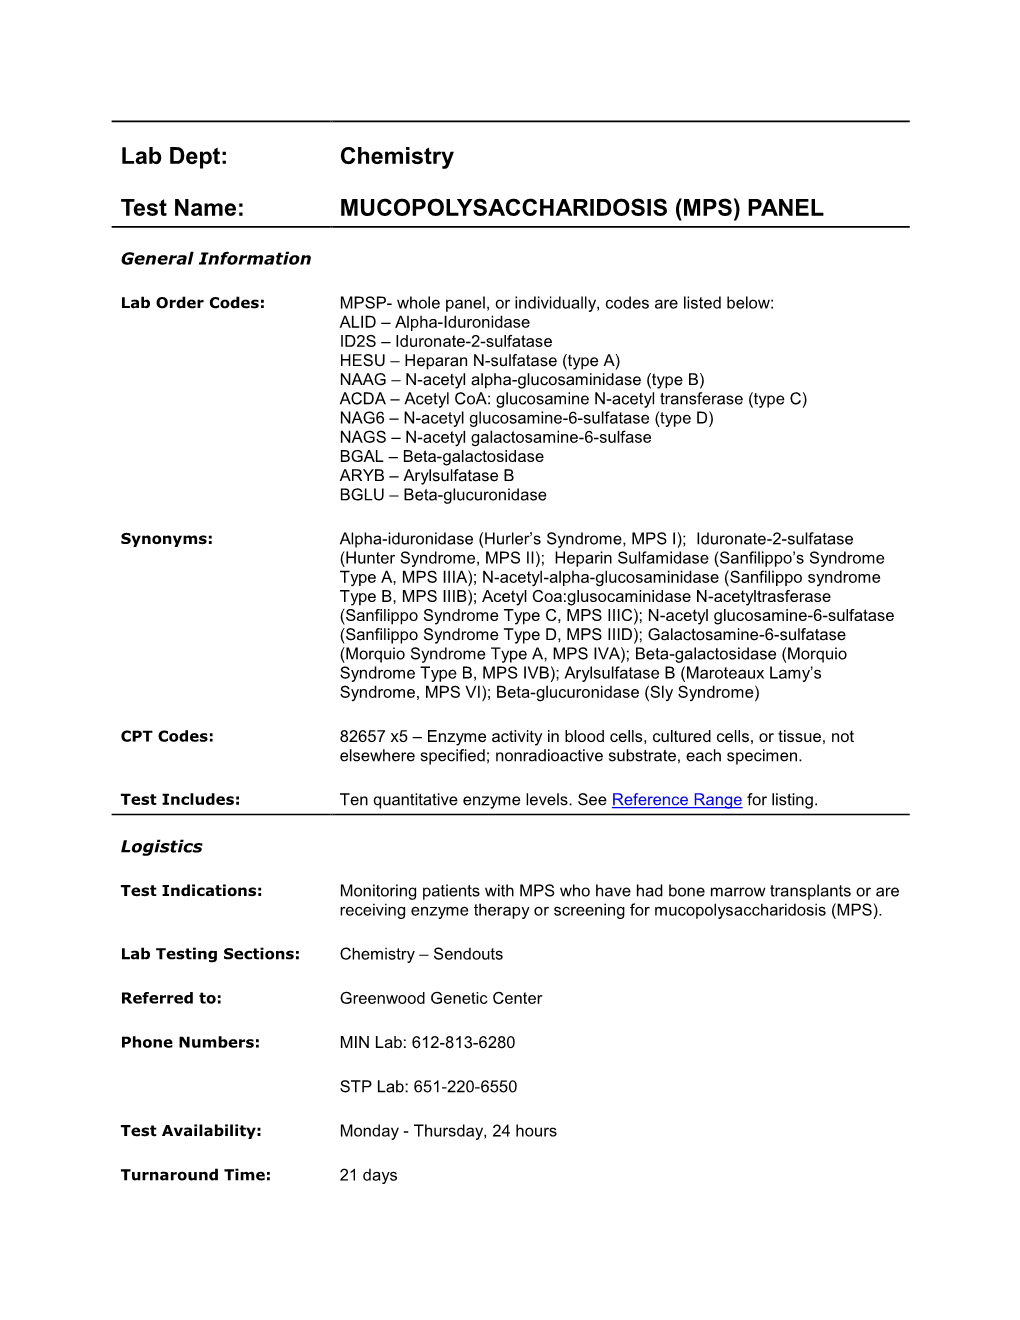 Mucopolysaccharidosis (Mps) Panel